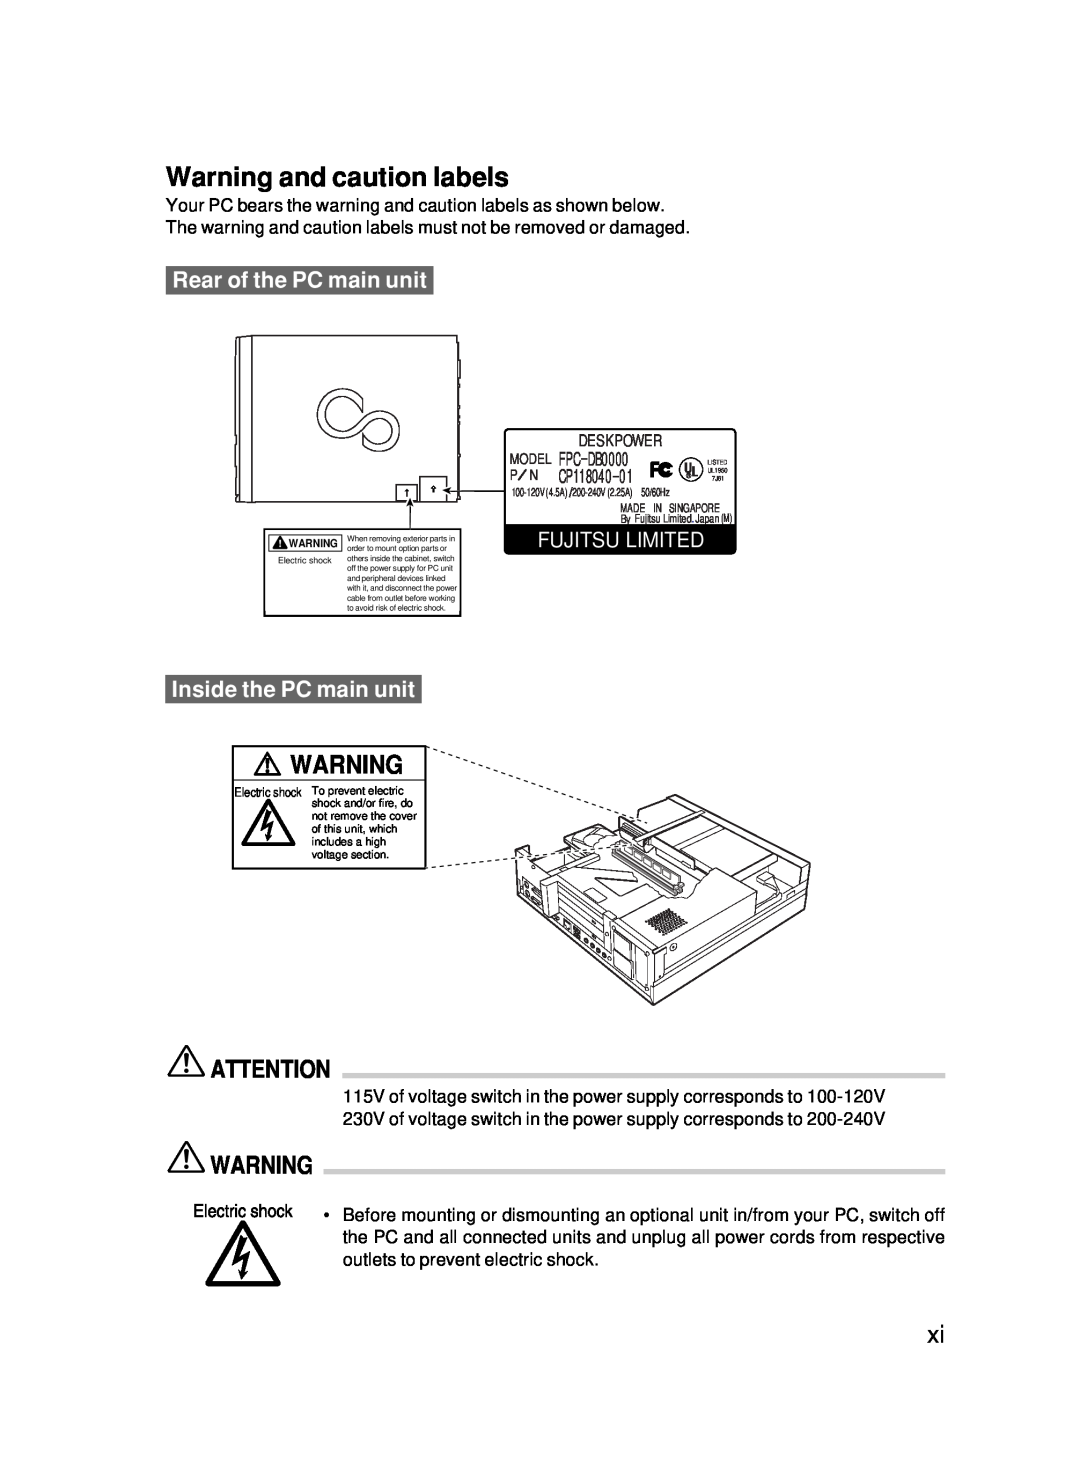 Fujitsu 5000 Warning and caution labels, Rear of the PC main unit, Fujitsu Limited, Inside the PC main unit, Deskpower 